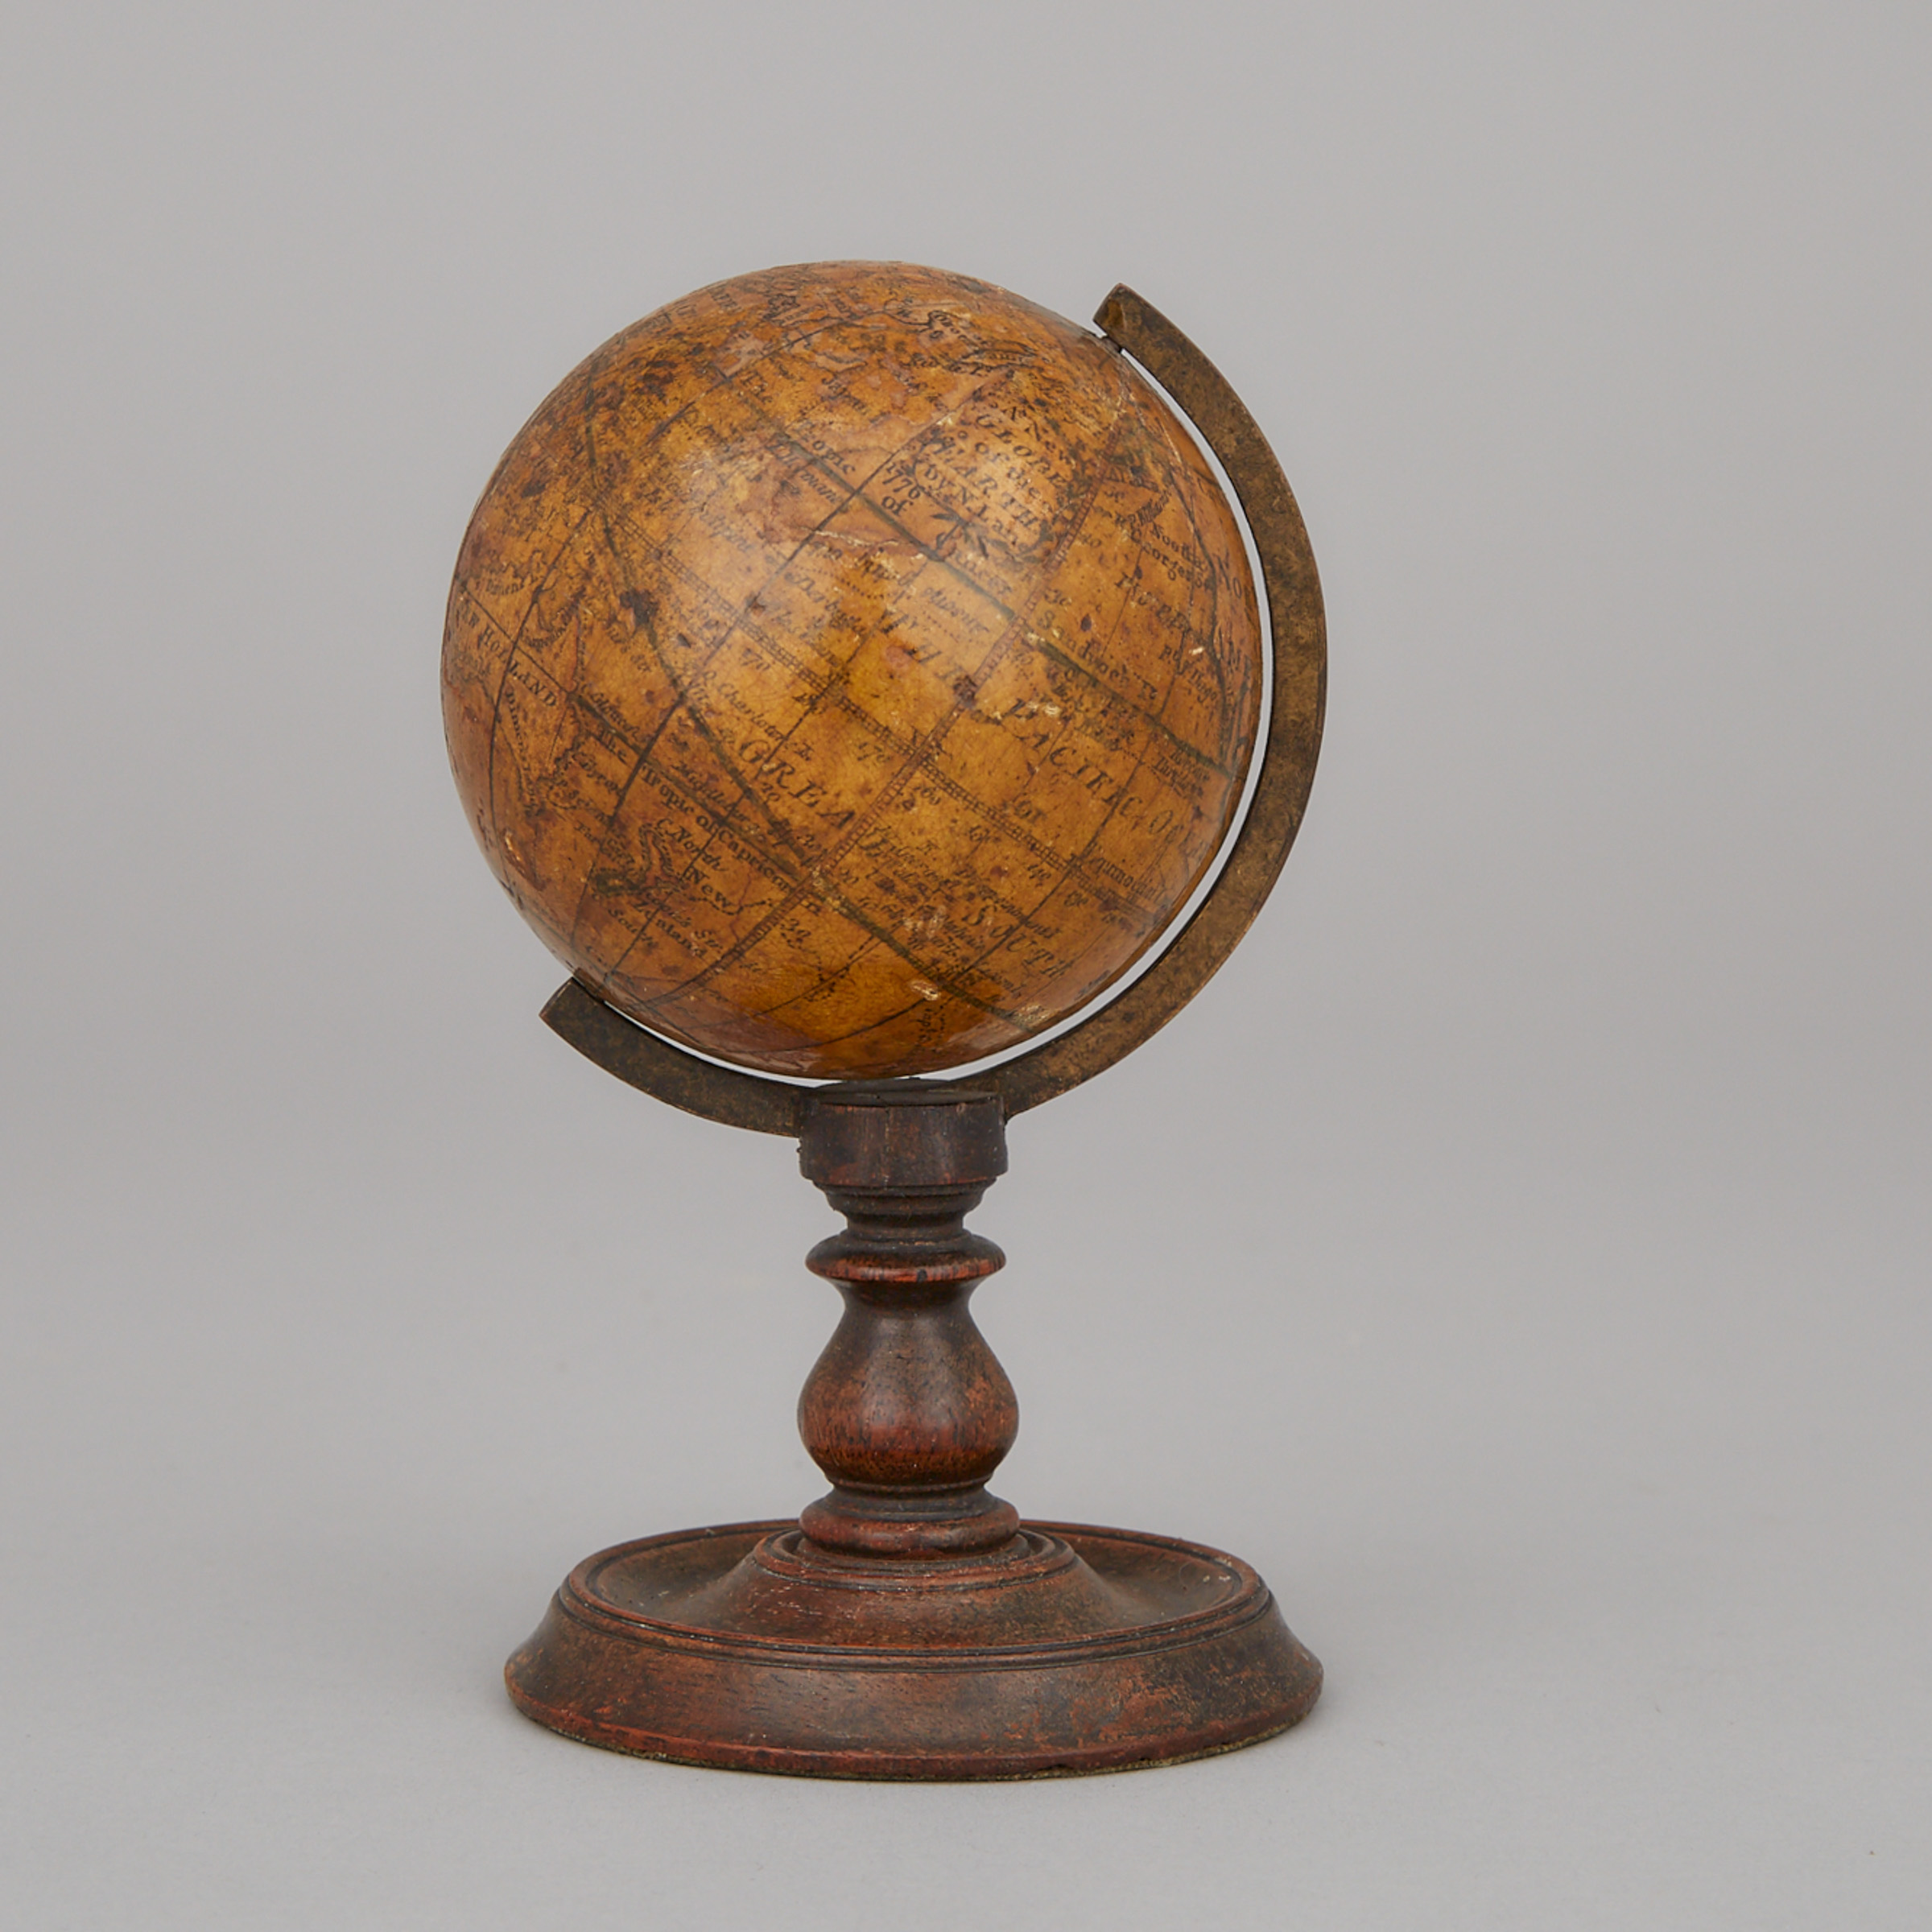 George III 2 3/4 Inch Terrestrial Pocket Globe on Stand, Nicholas Lane, dated 1776